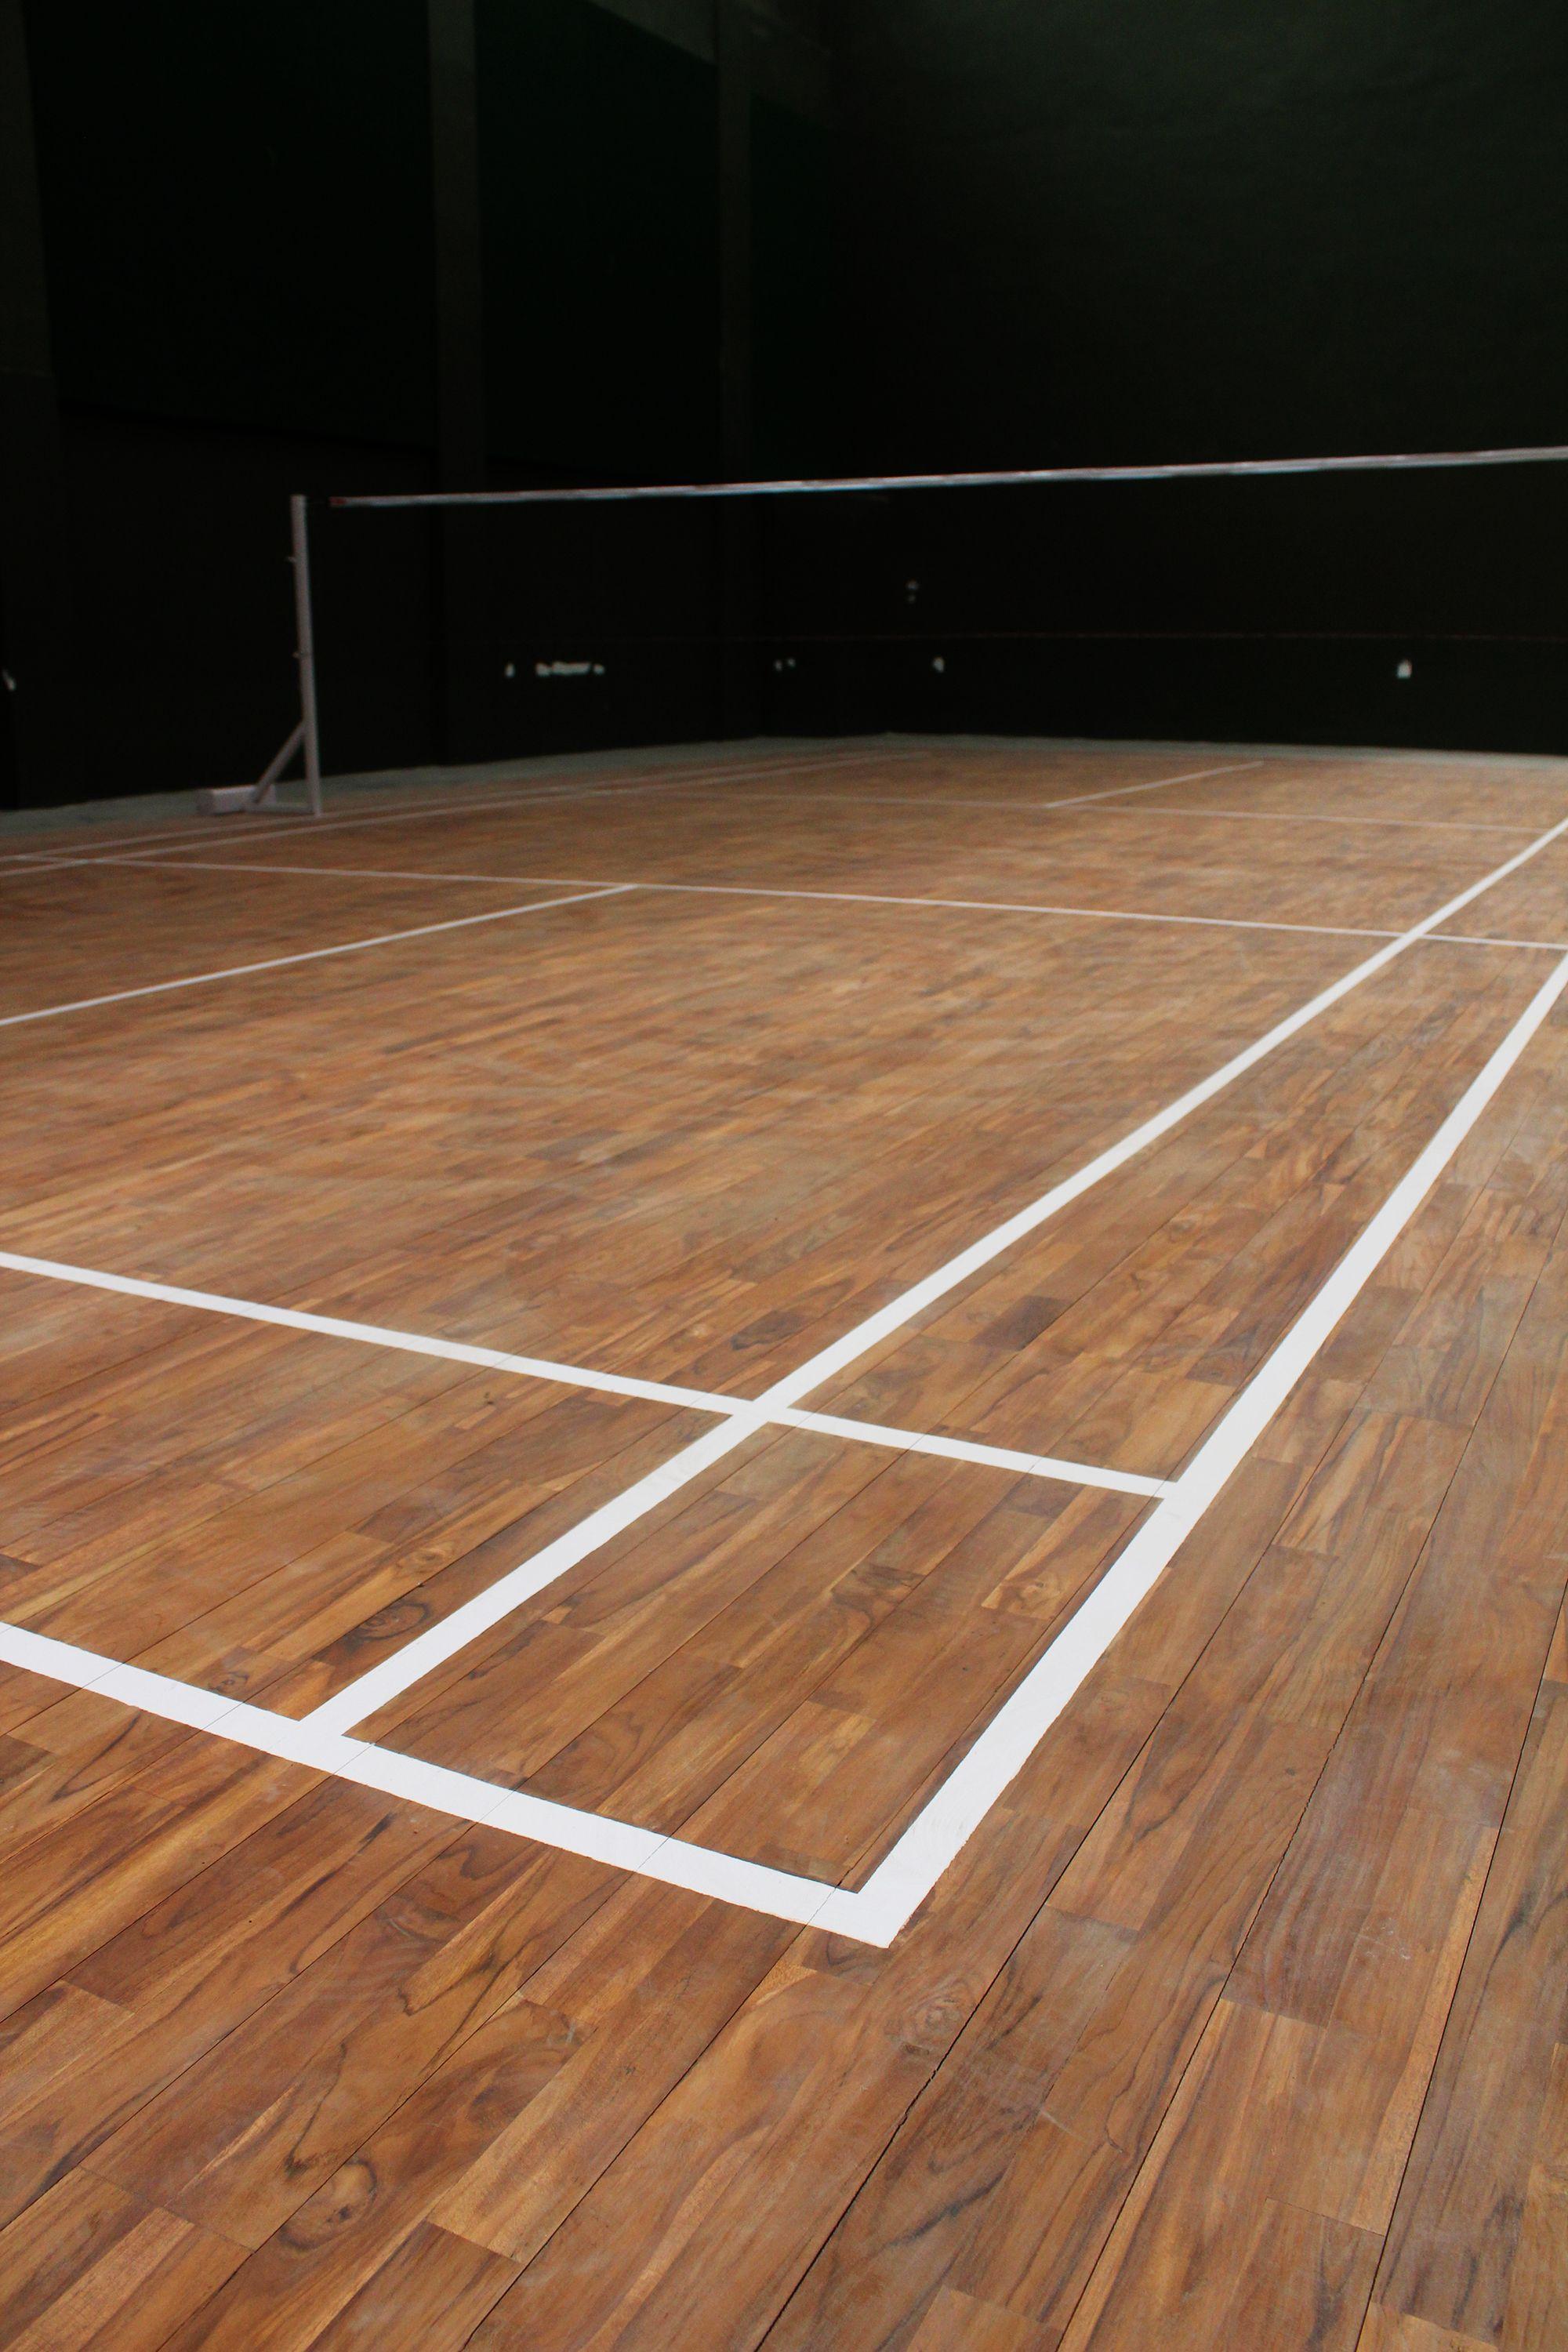 Empty Badminton Court With Wood Based Flooring Links